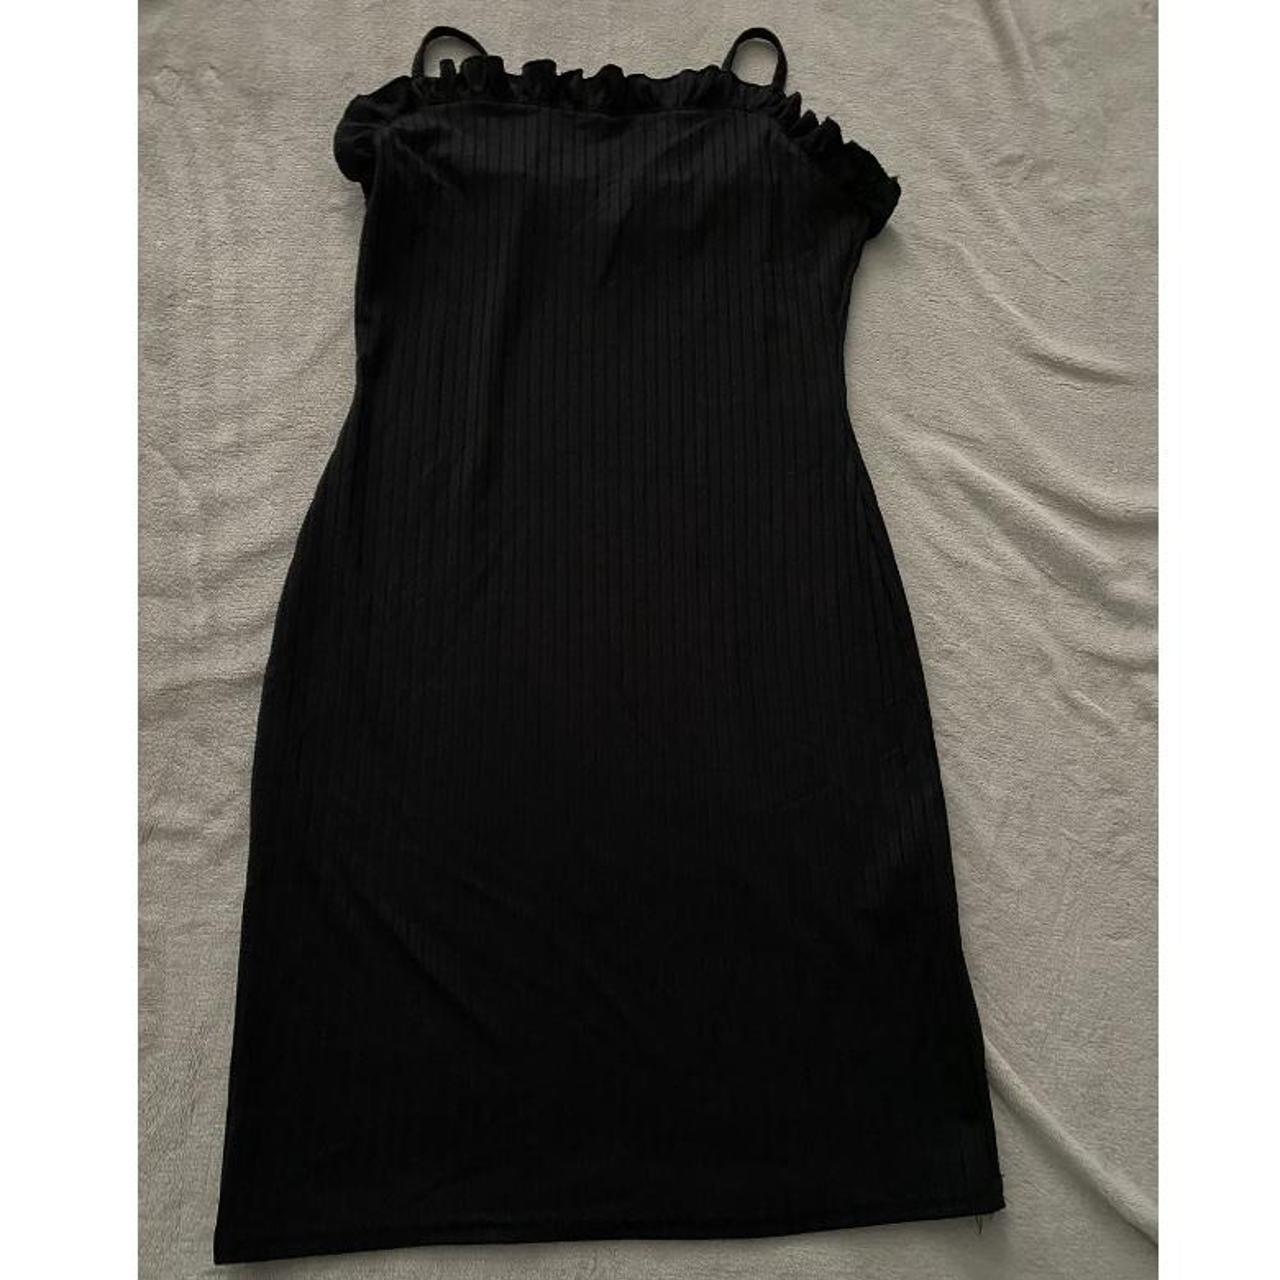 Missguided Women's Black Dress | Depop